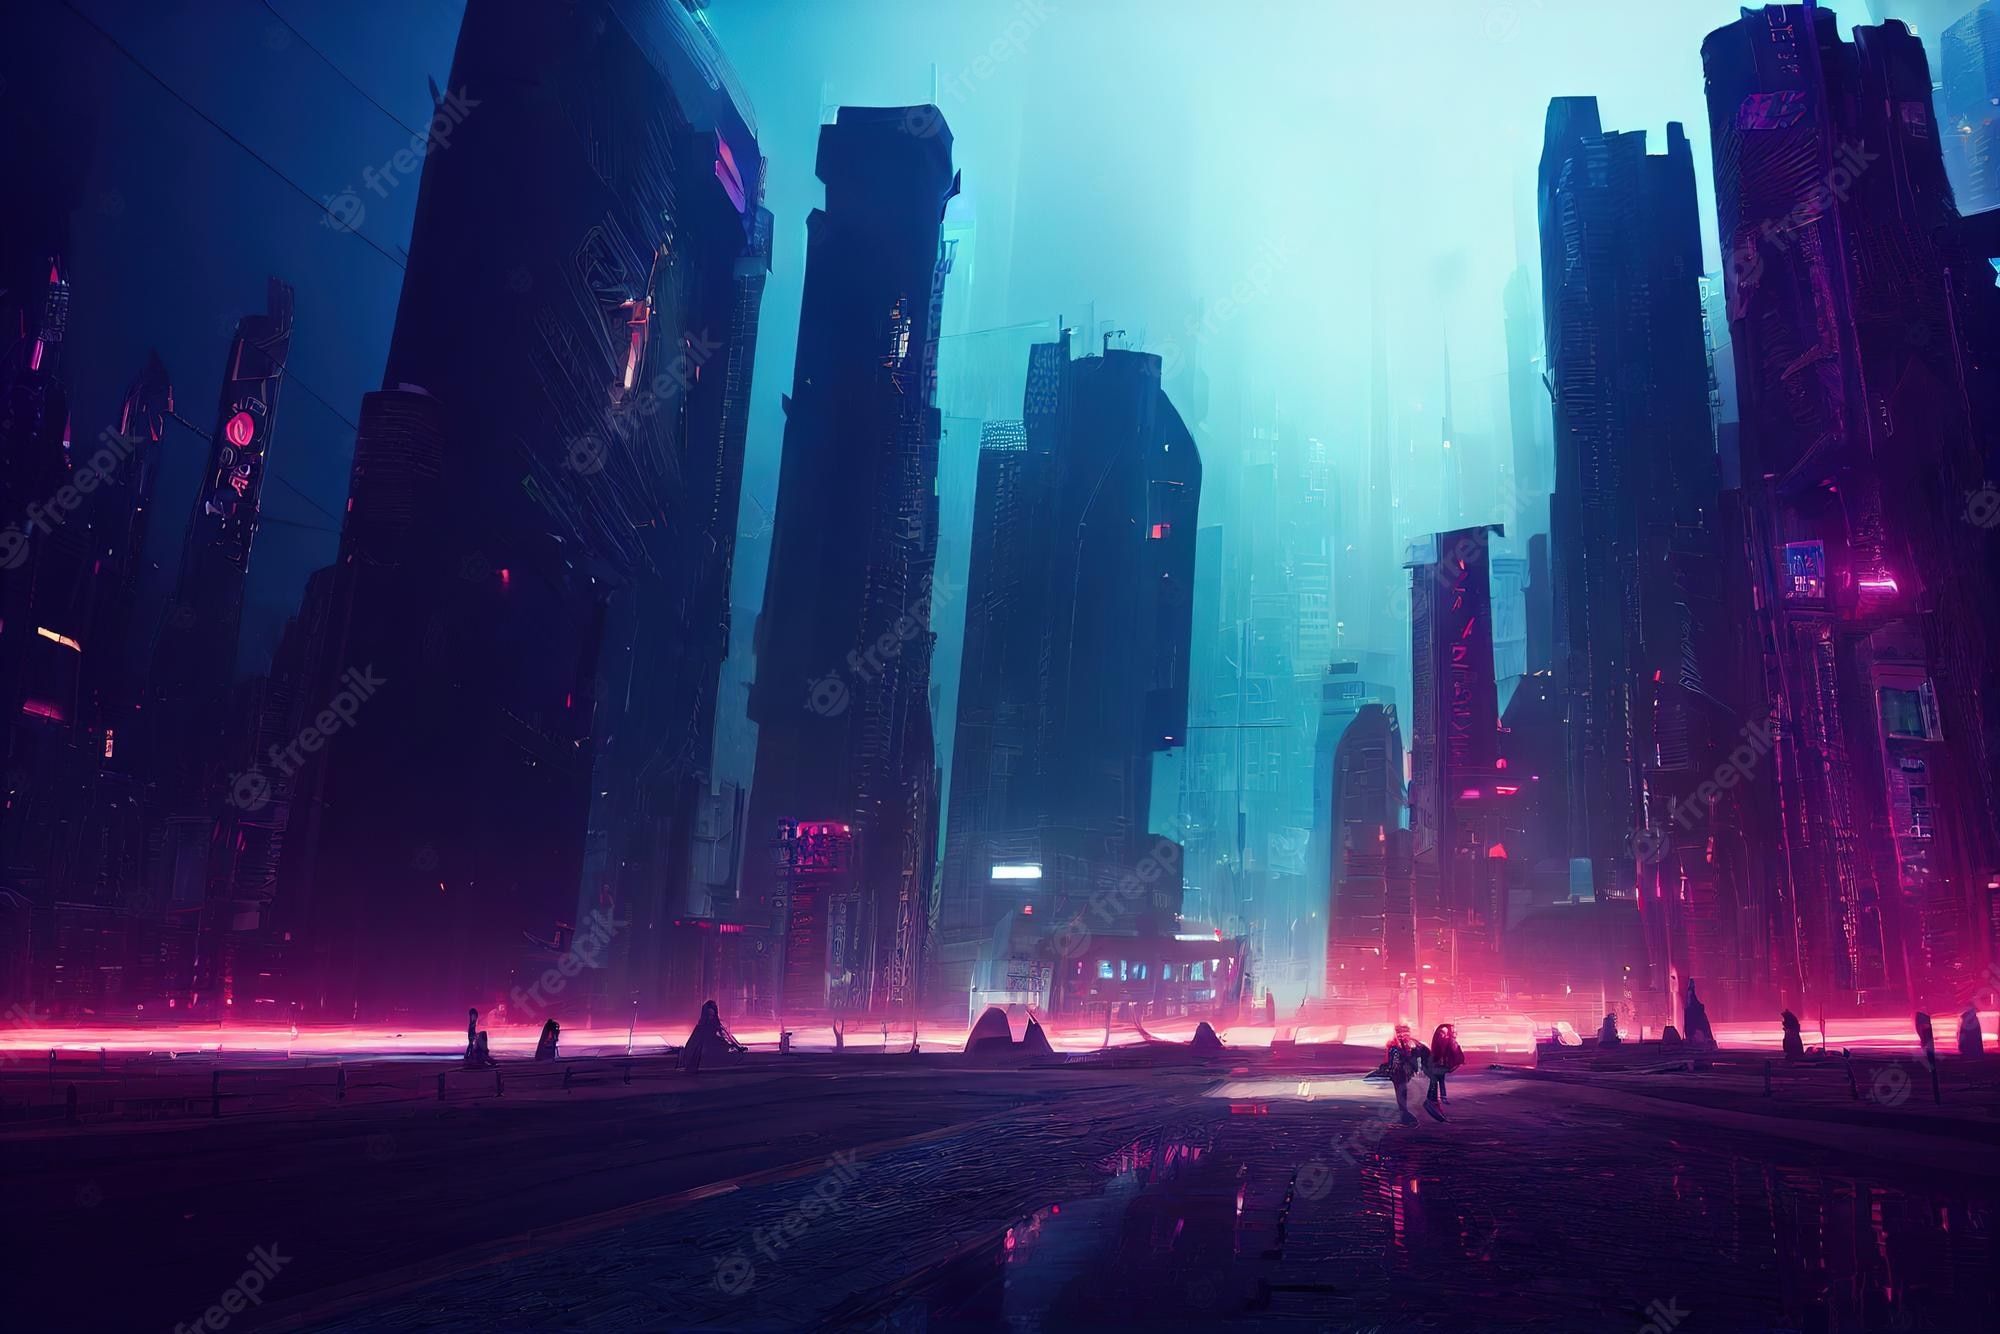 A futuristic city at night - City